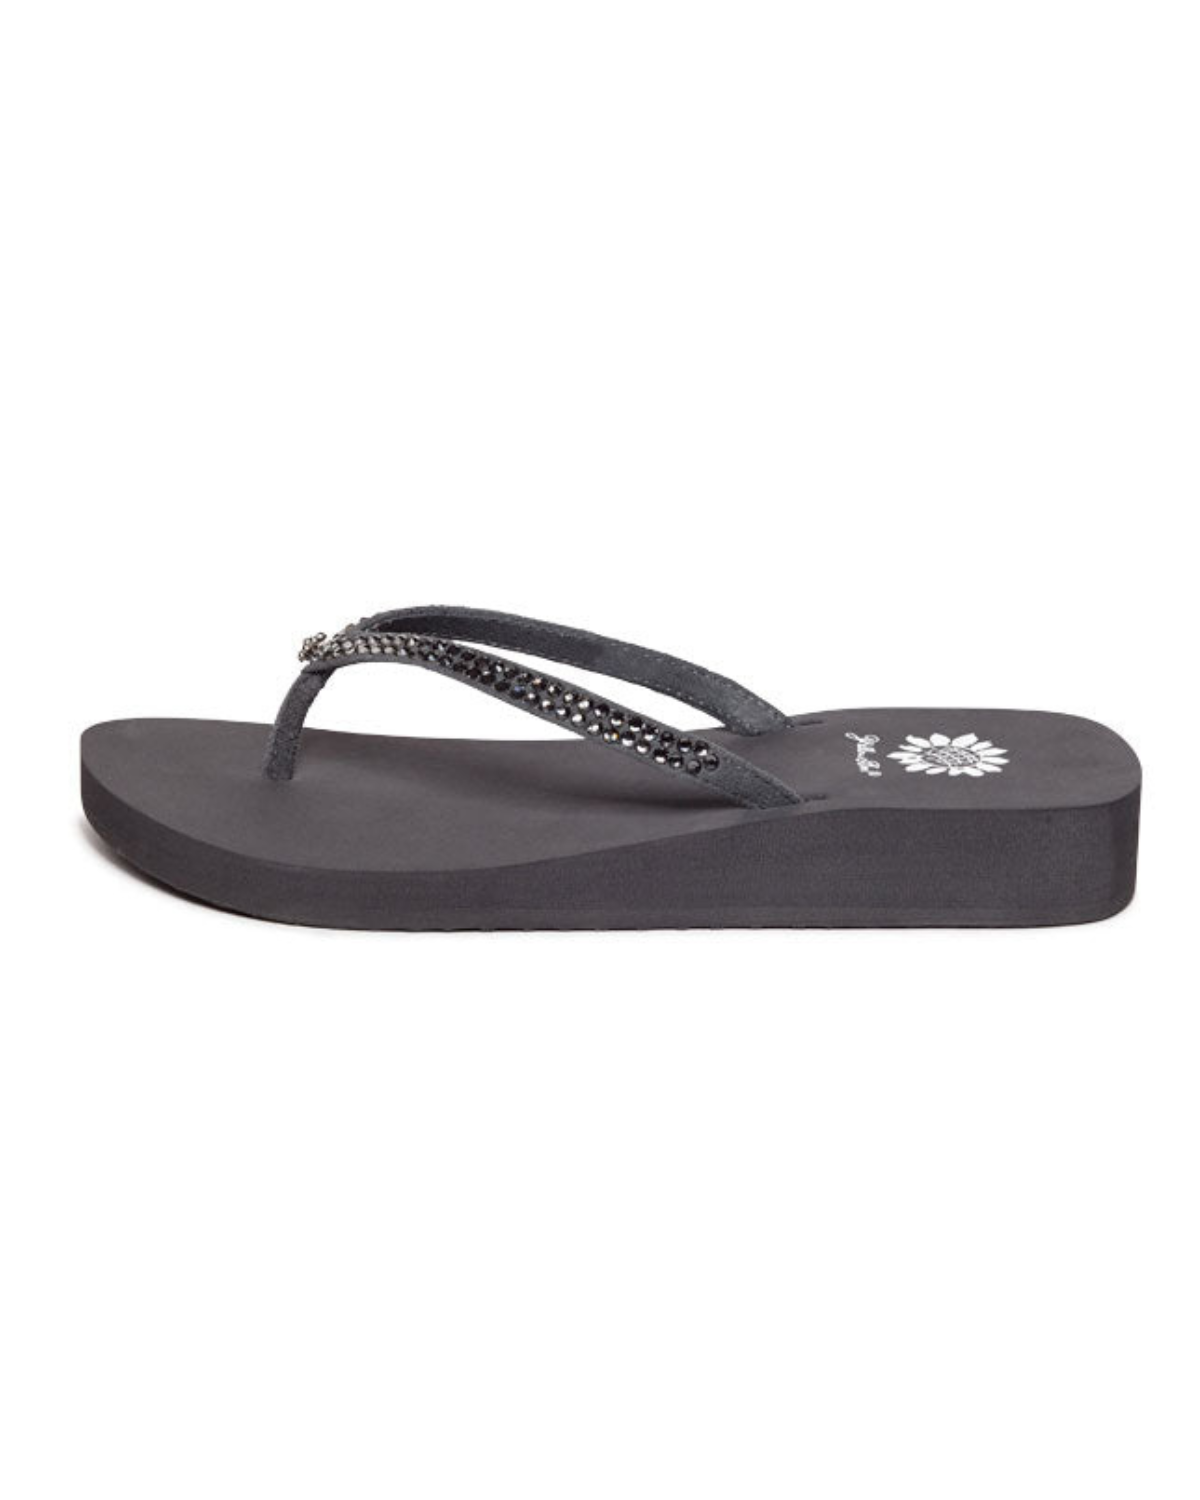 Women's grey wedge sandal with black rhinestones on the strap.